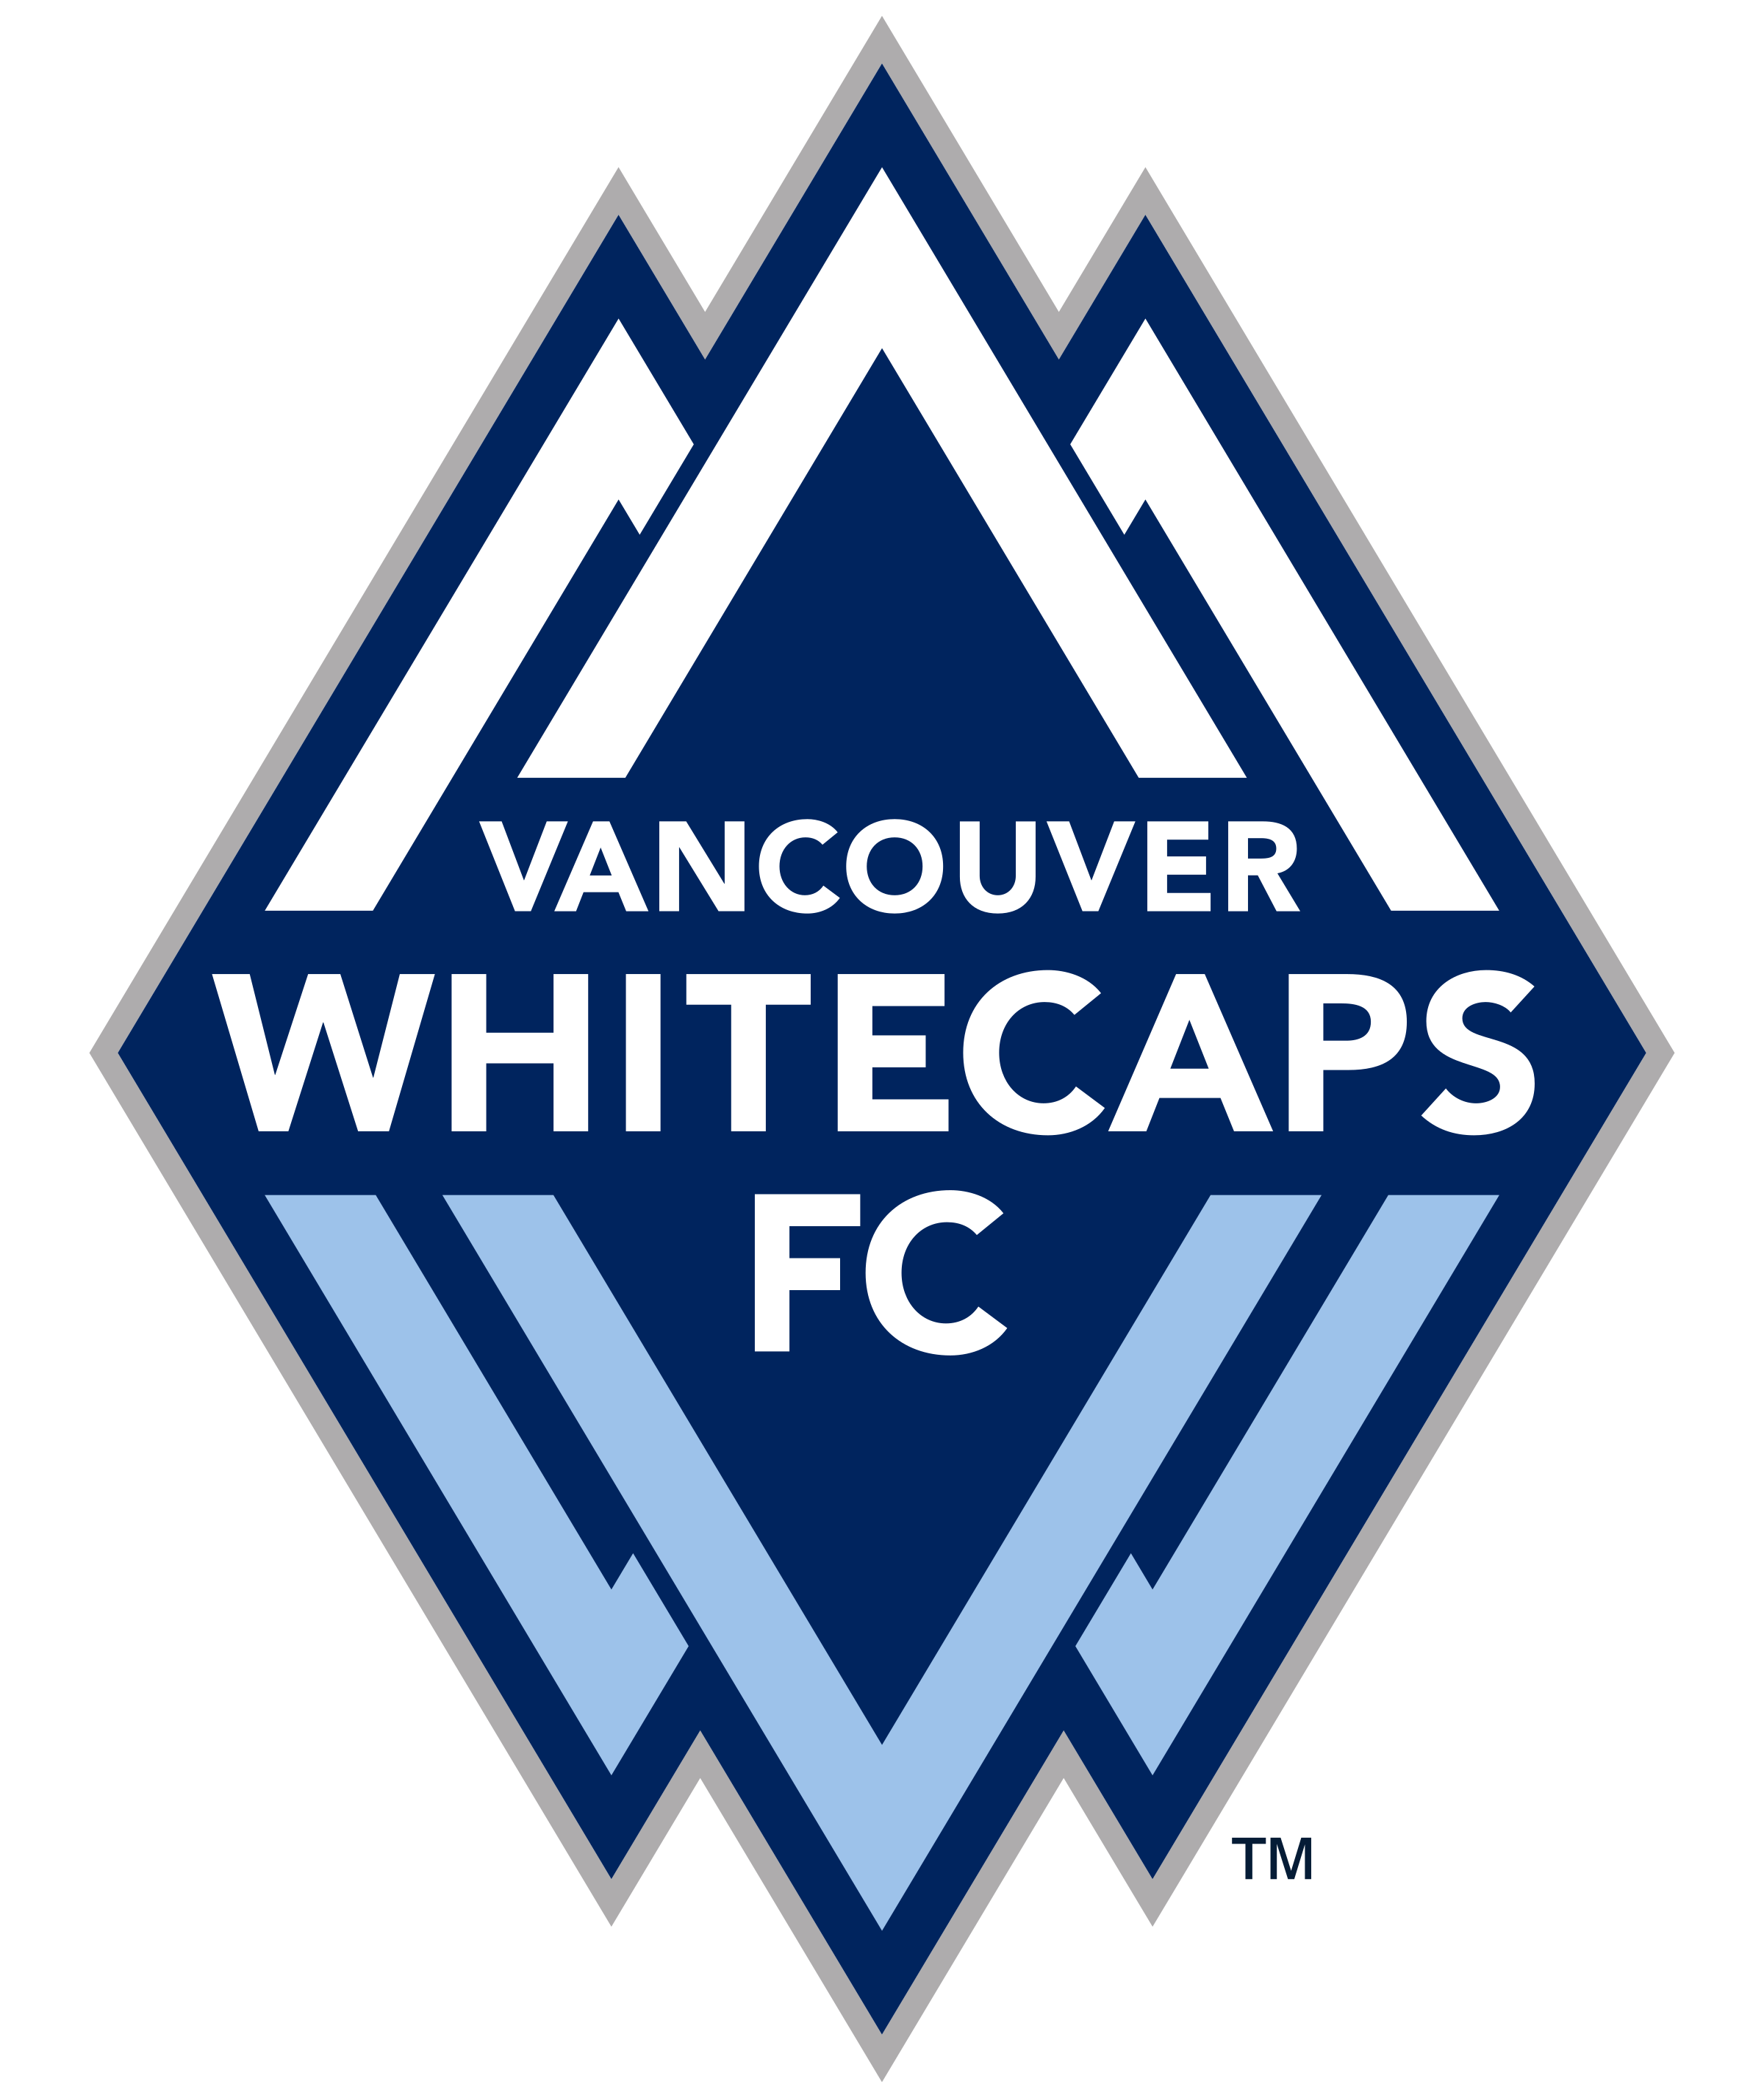 Vancouver Whitecaps Fc Logo Transparent - Vancouver Whitecaps Fc, Transparent background PNG HD thumbnail